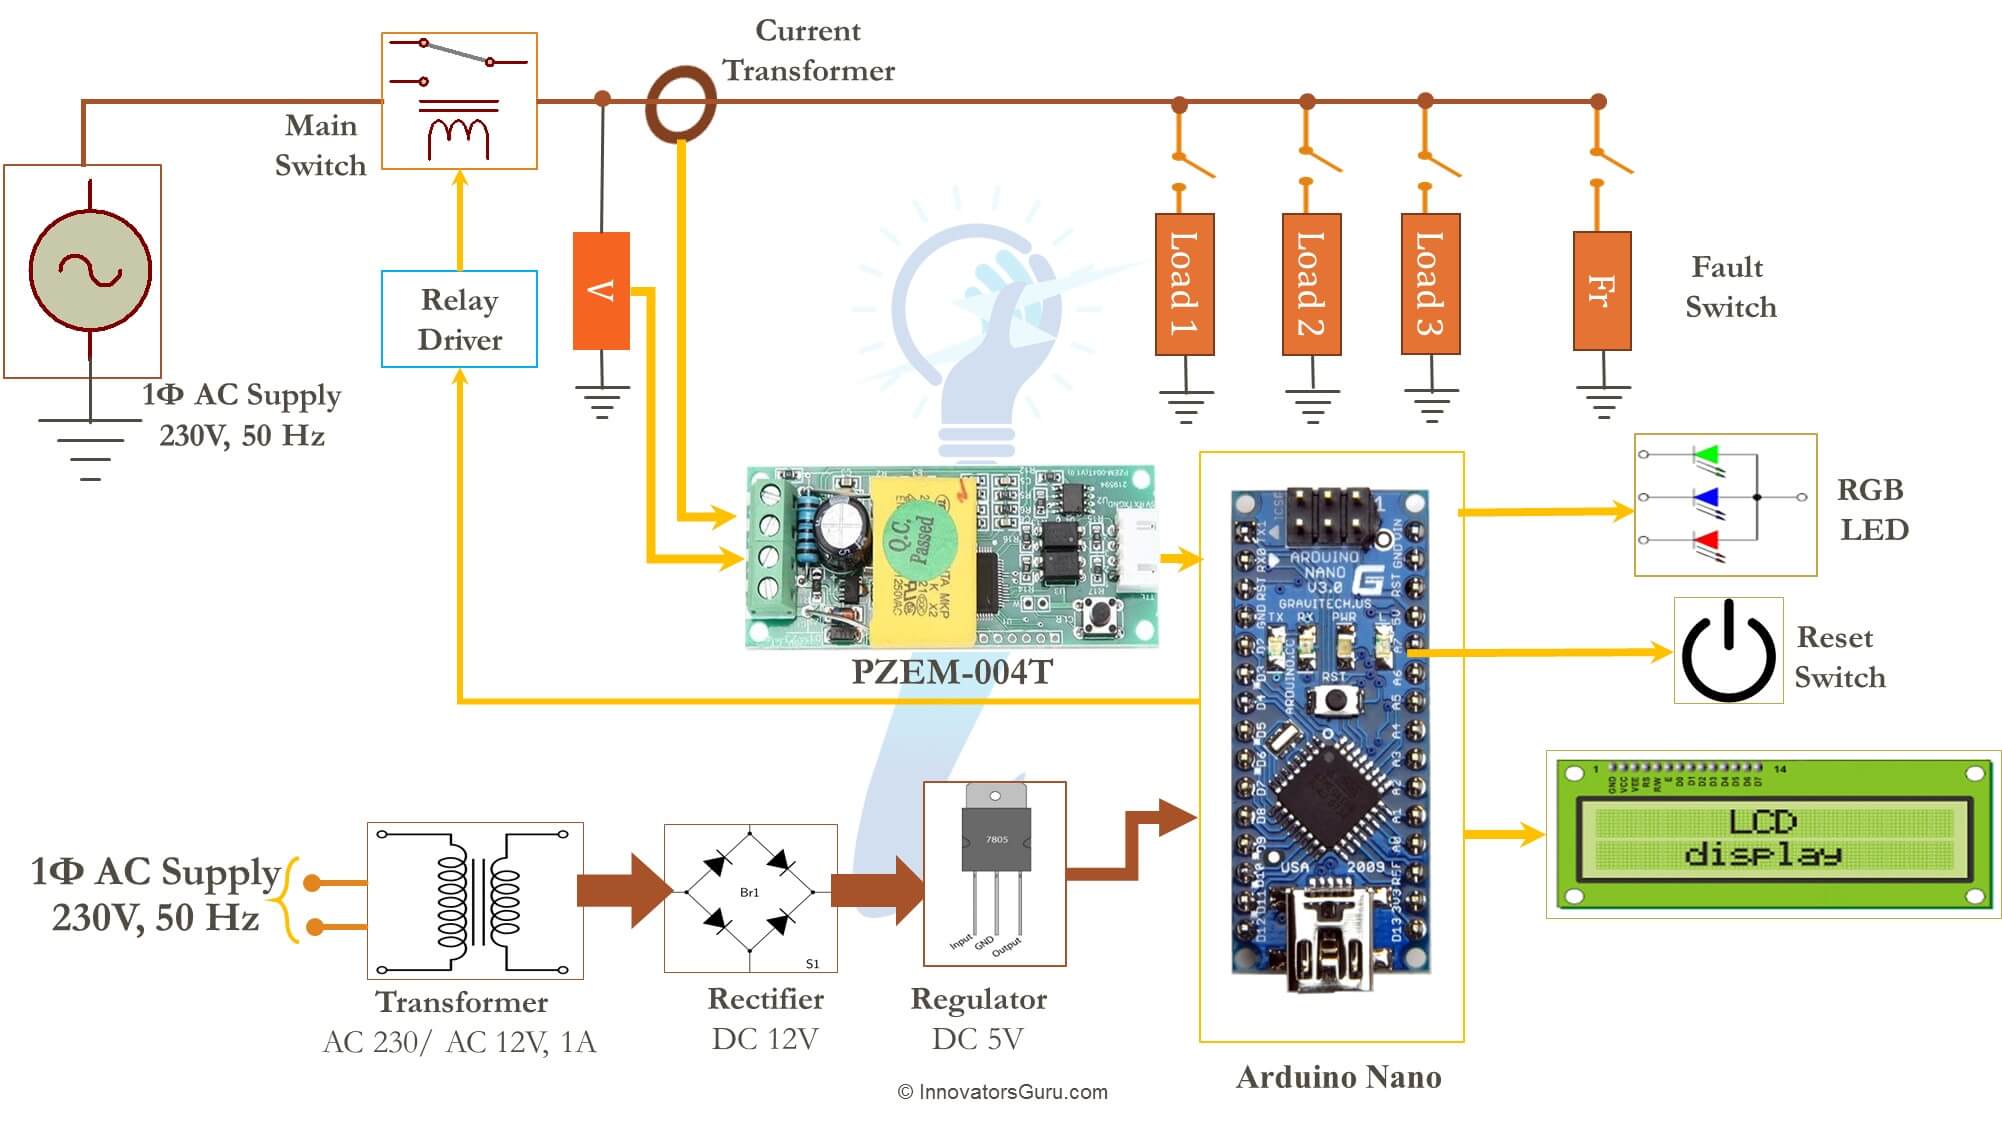 IG001 AC Digital Multi function Smart Meter using Arduino and PZEM-004T